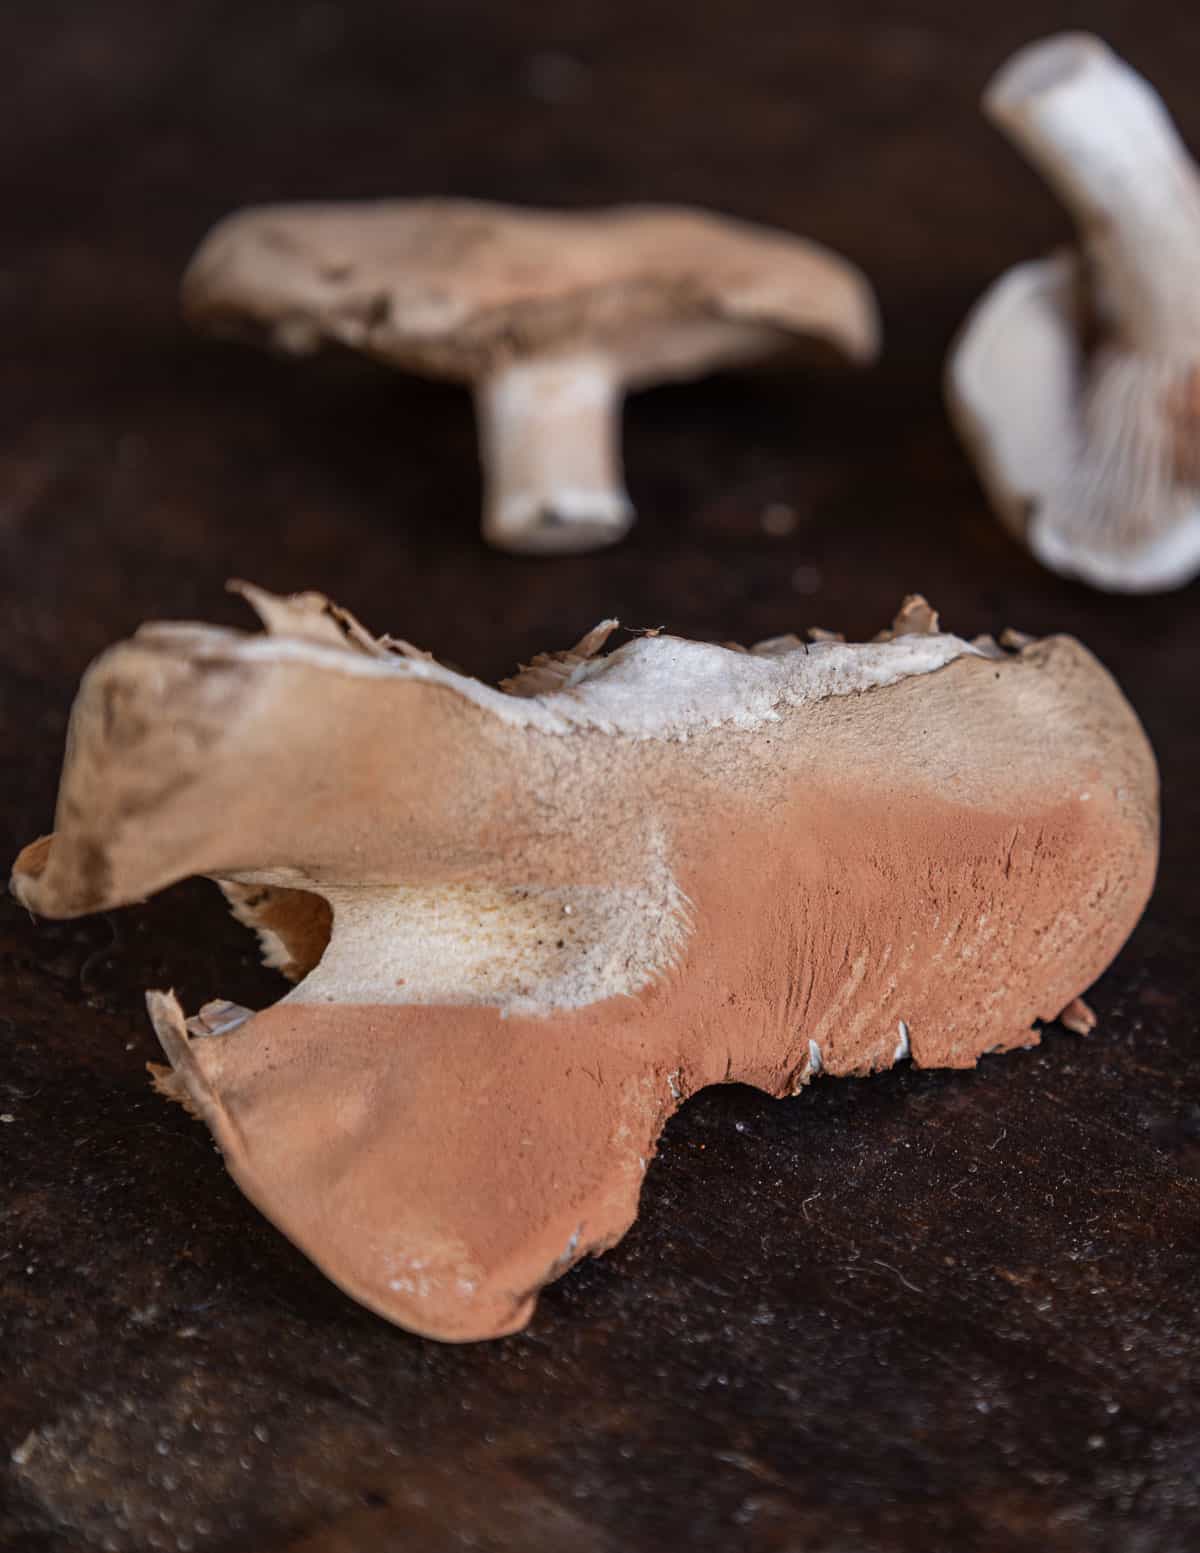 Non-aborted entoloma mushrooms (Entoloma abortivum) showing a pink spore print.